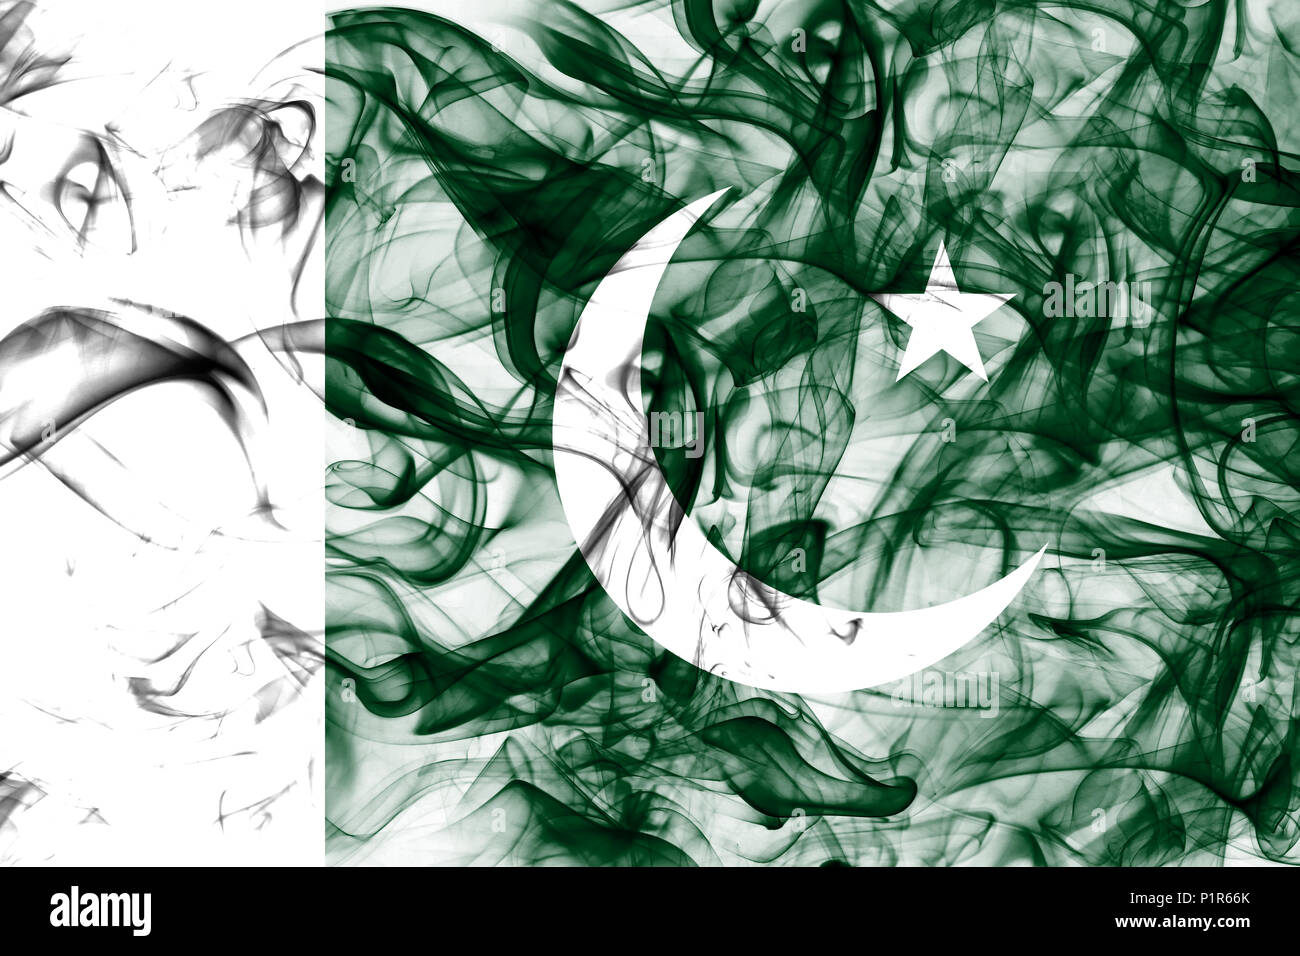 Pakistán bandera de humo Foto de stock